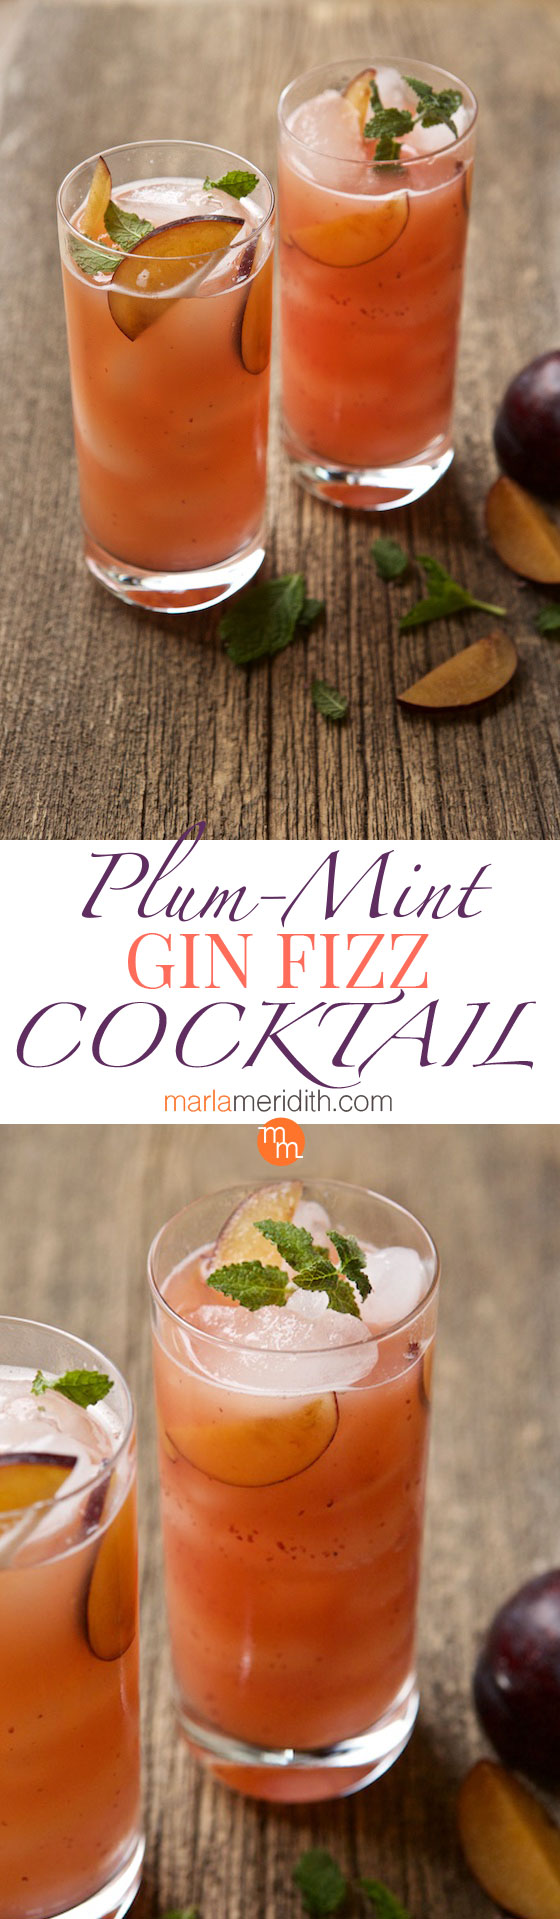 Plum-Mint Gin Fizz Cocktail recipe